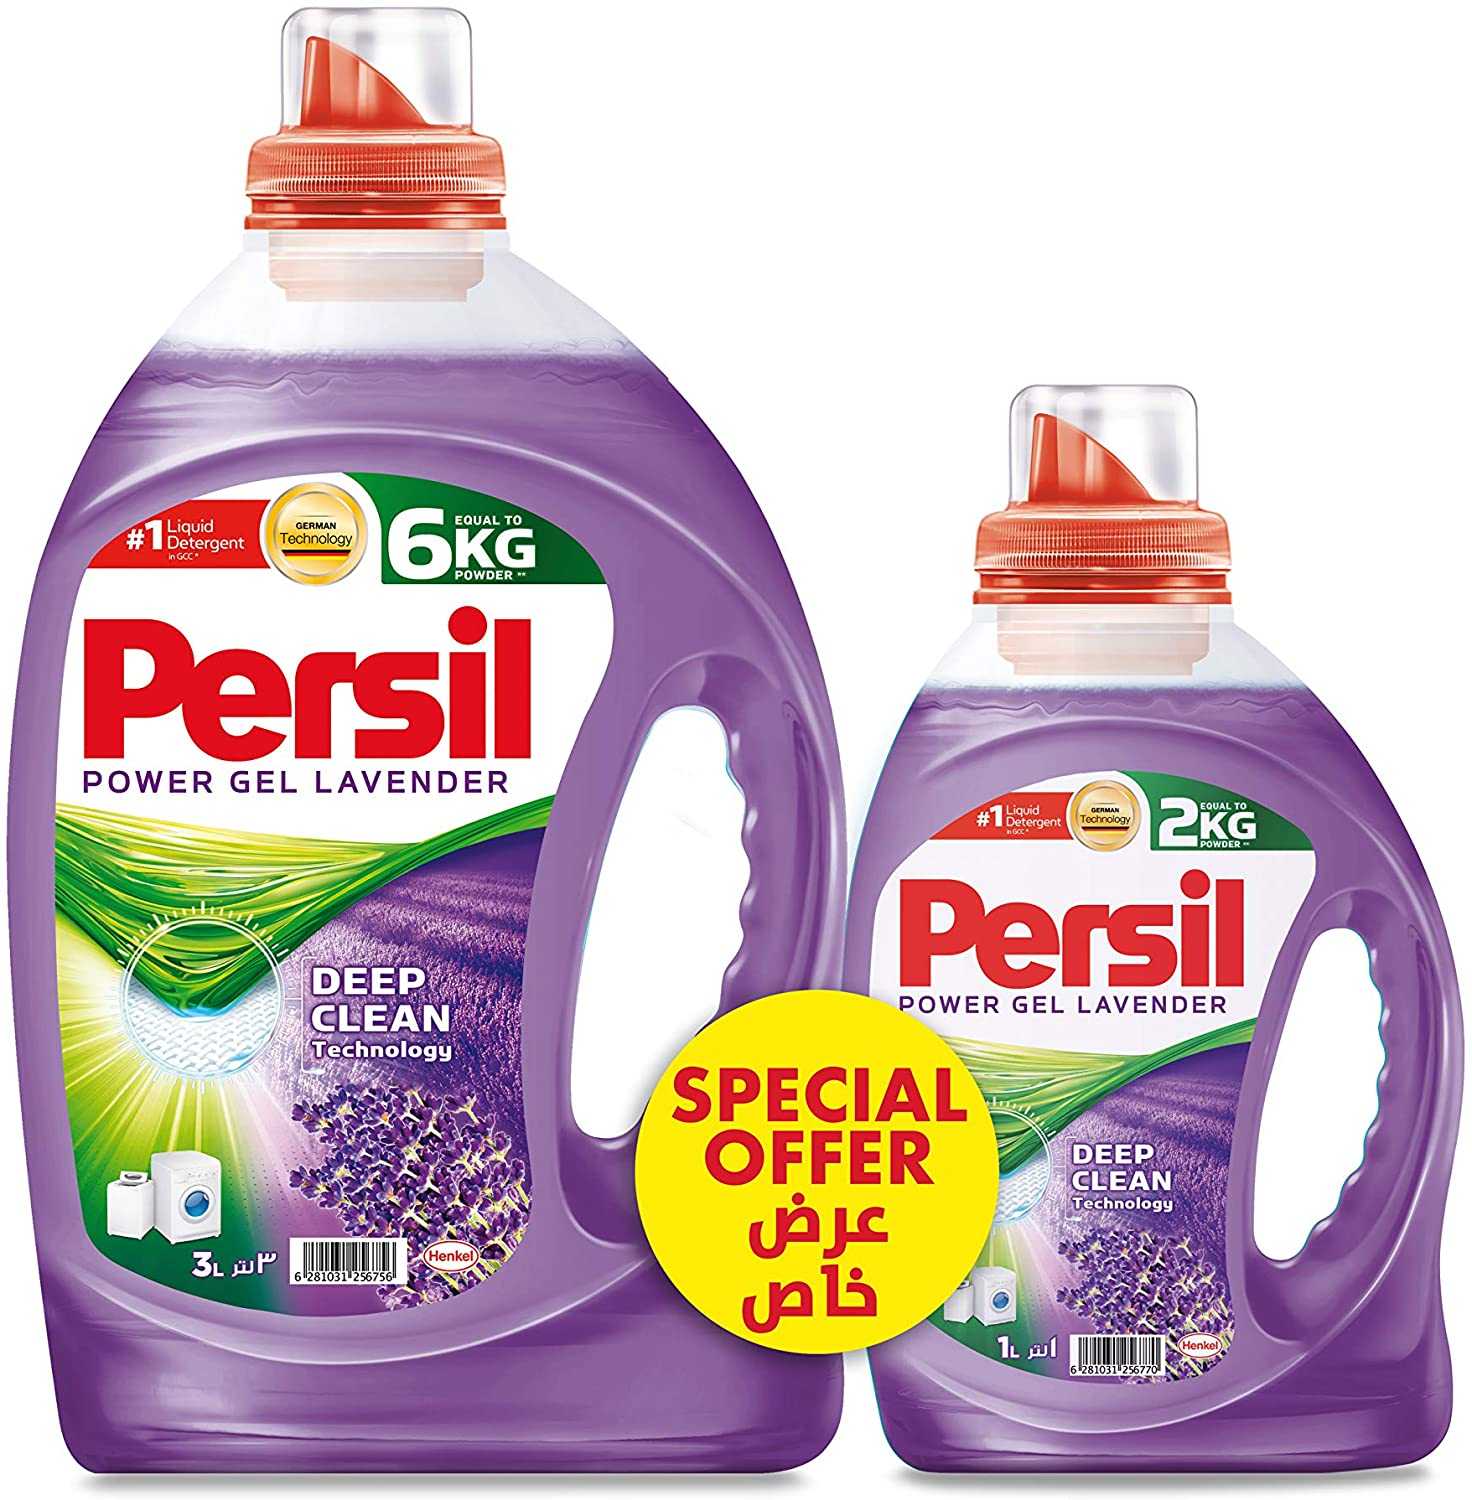 Persil Power Gel Lavender Deep Clean Detergent 3L and 1L